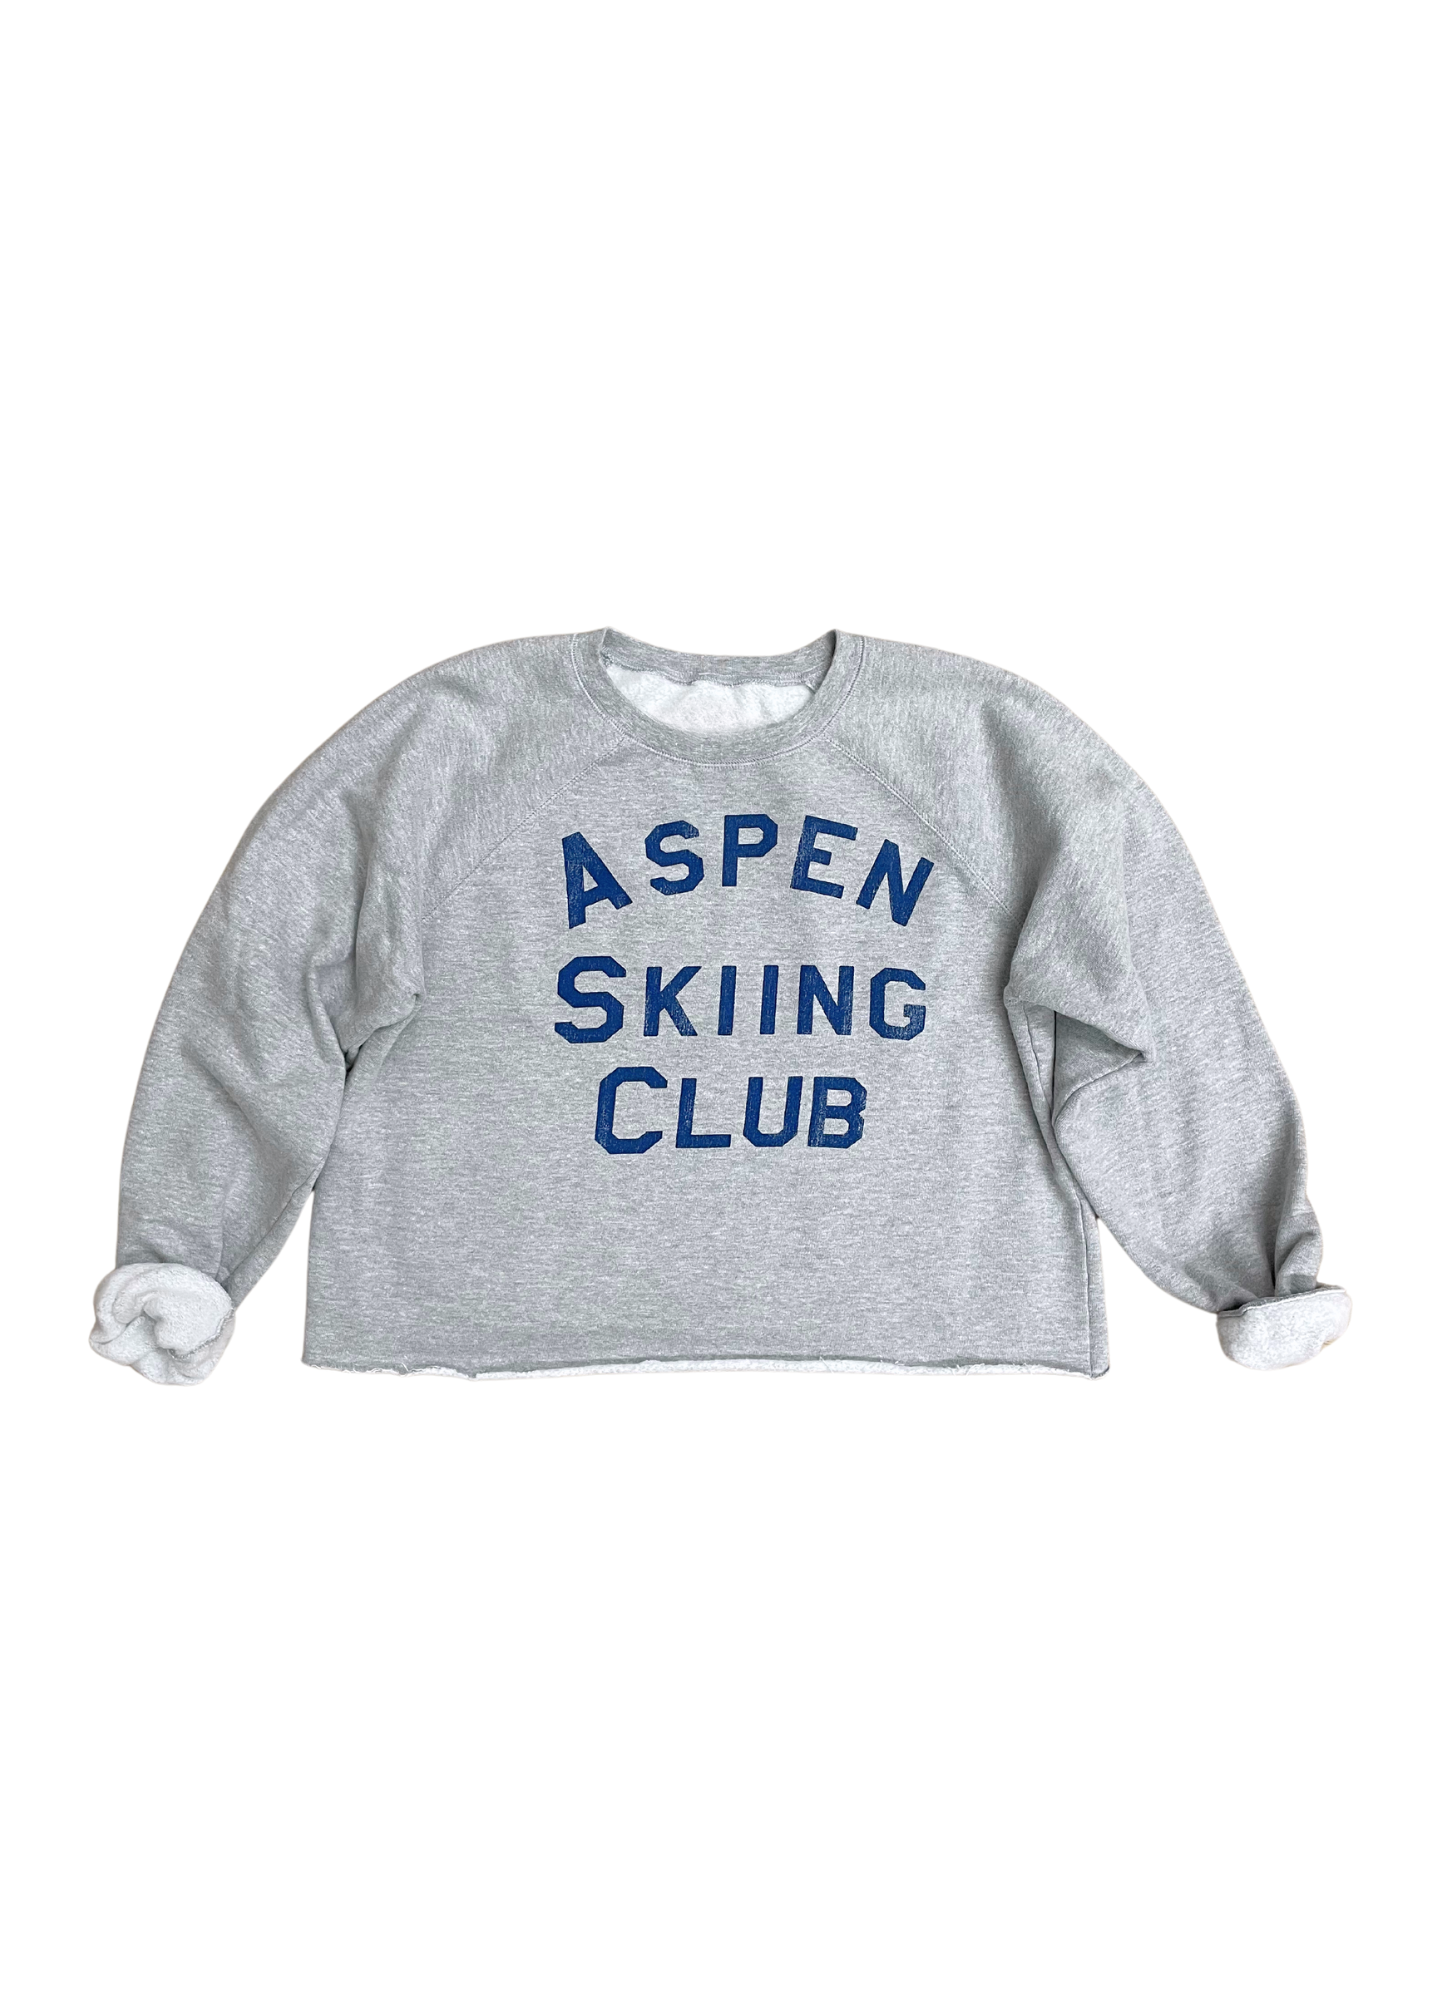 ASPEN SKIING CLUB CREWNECK SWEATSHIRT